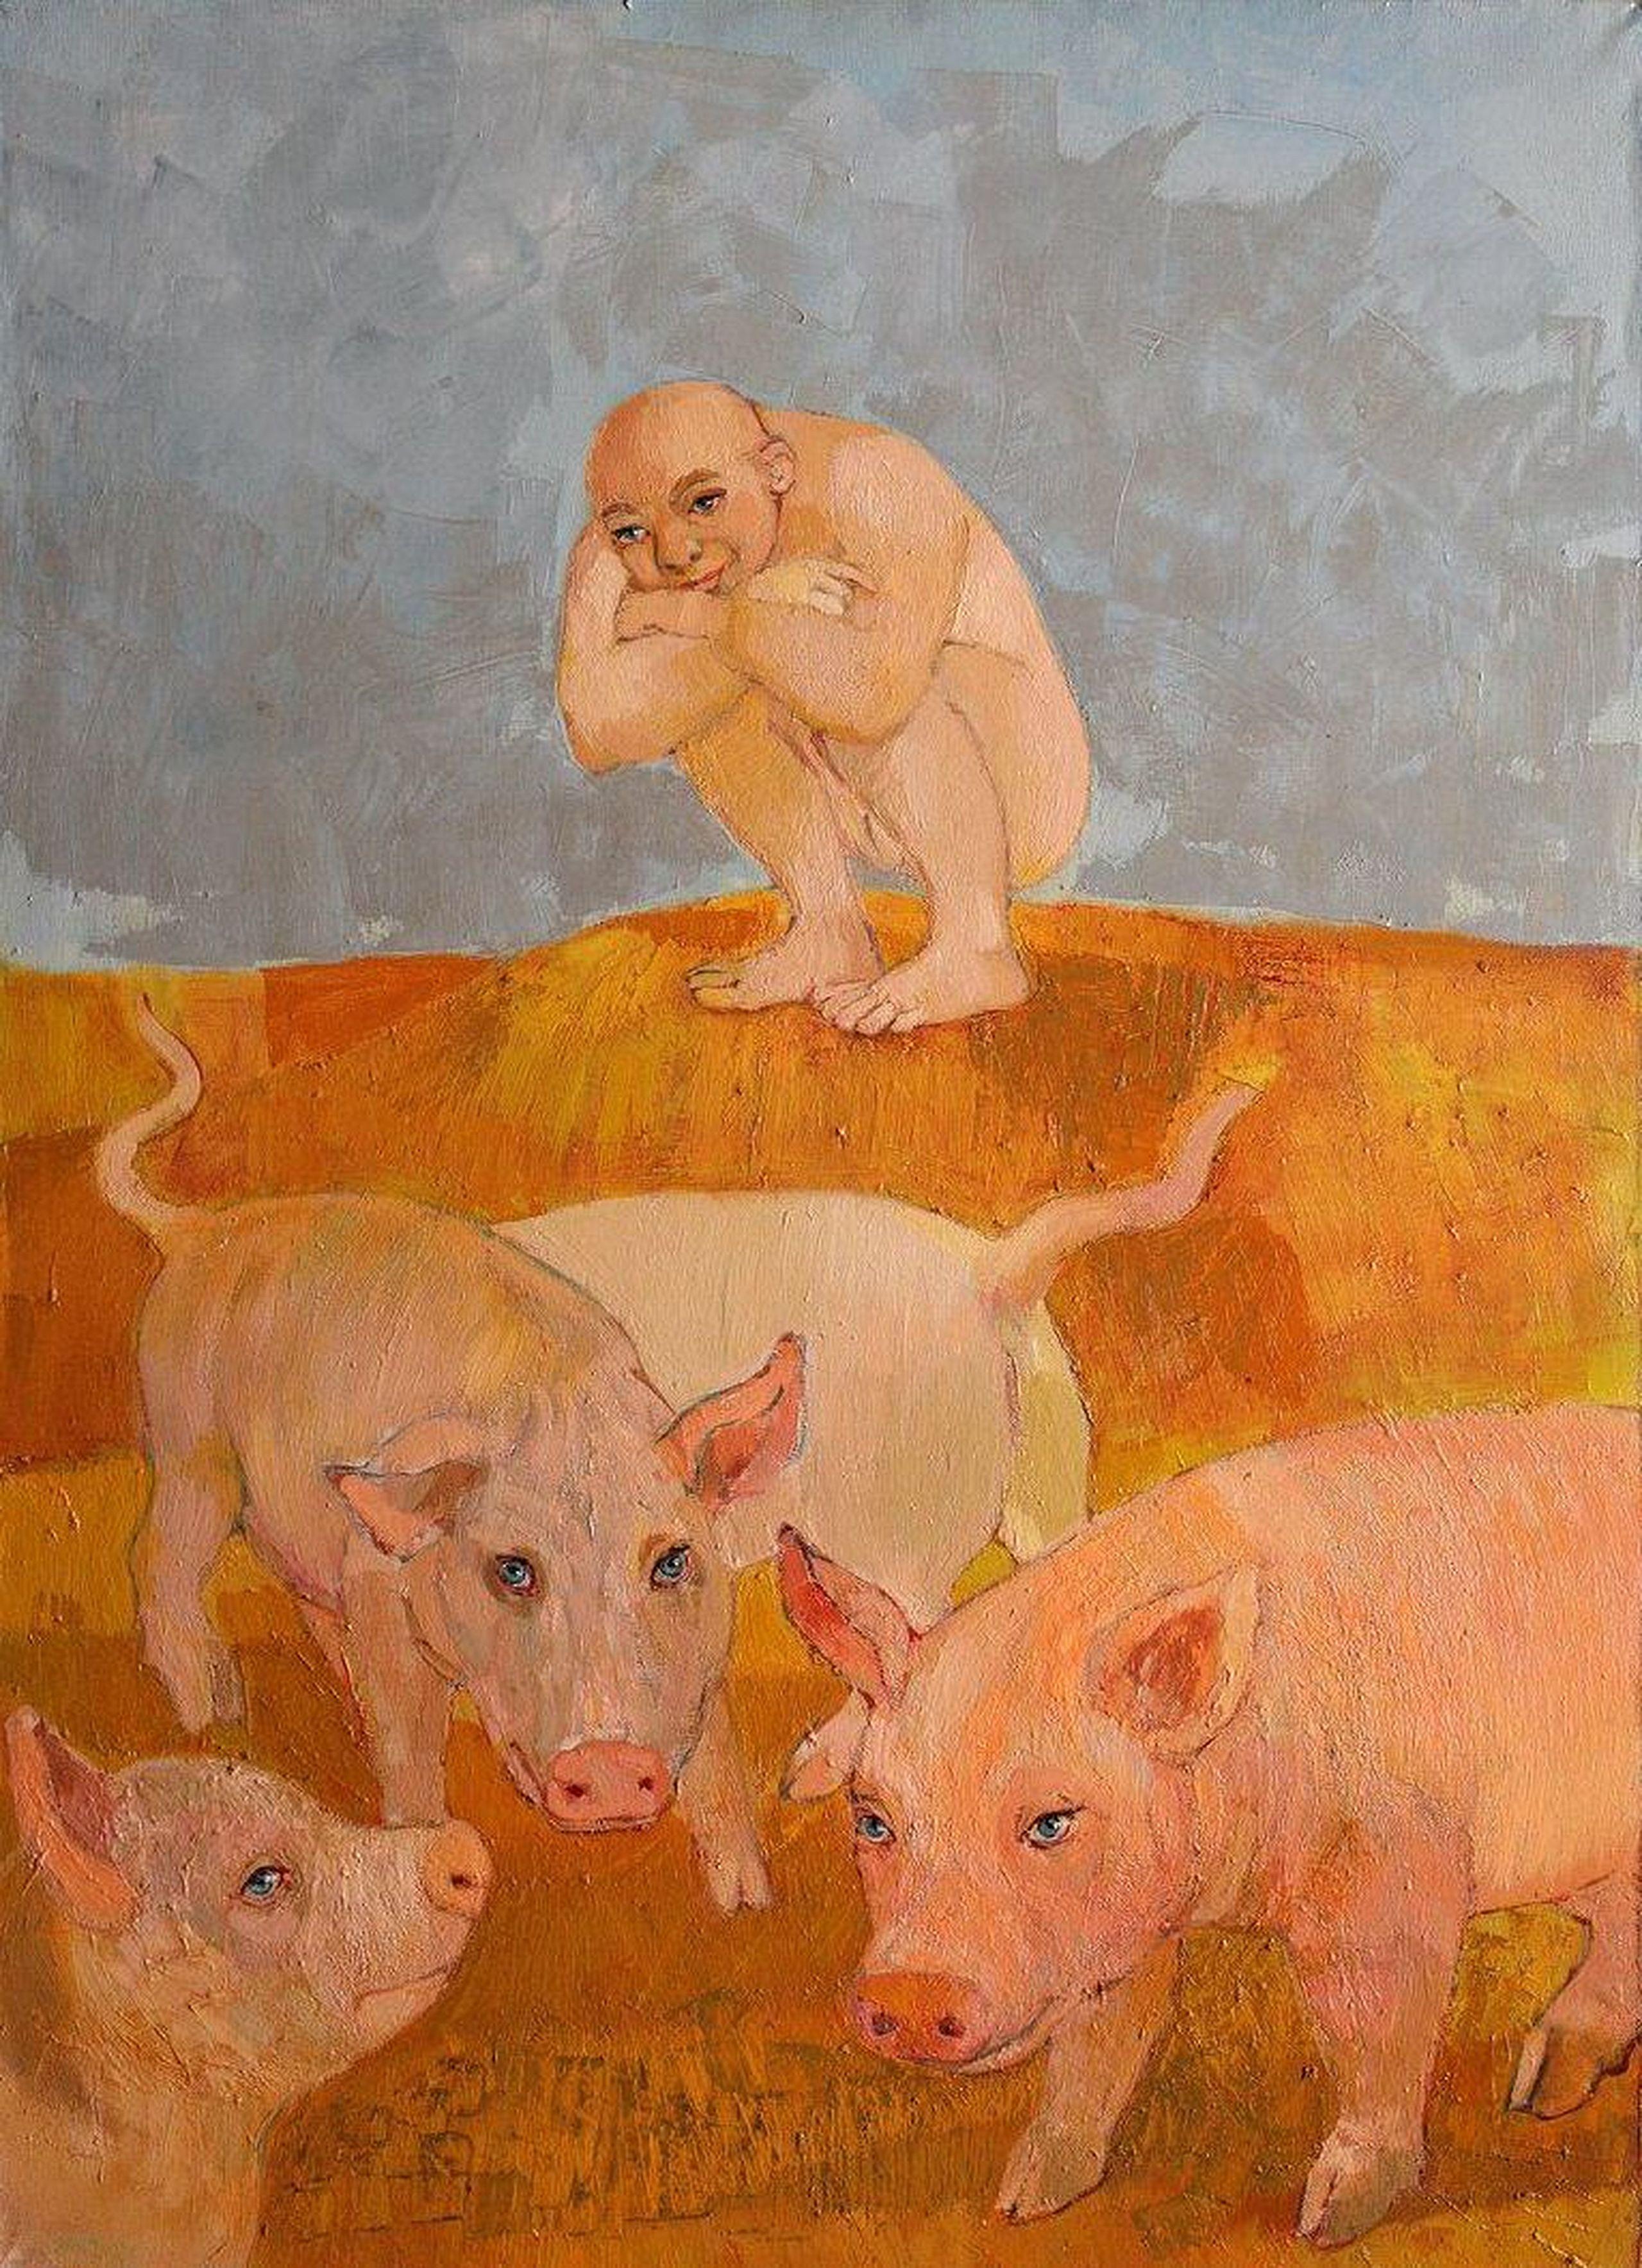 Dagnia Cherevichnika Figurative Painting - Pig herder. 2007. Oil on canvas, 70x50 cm